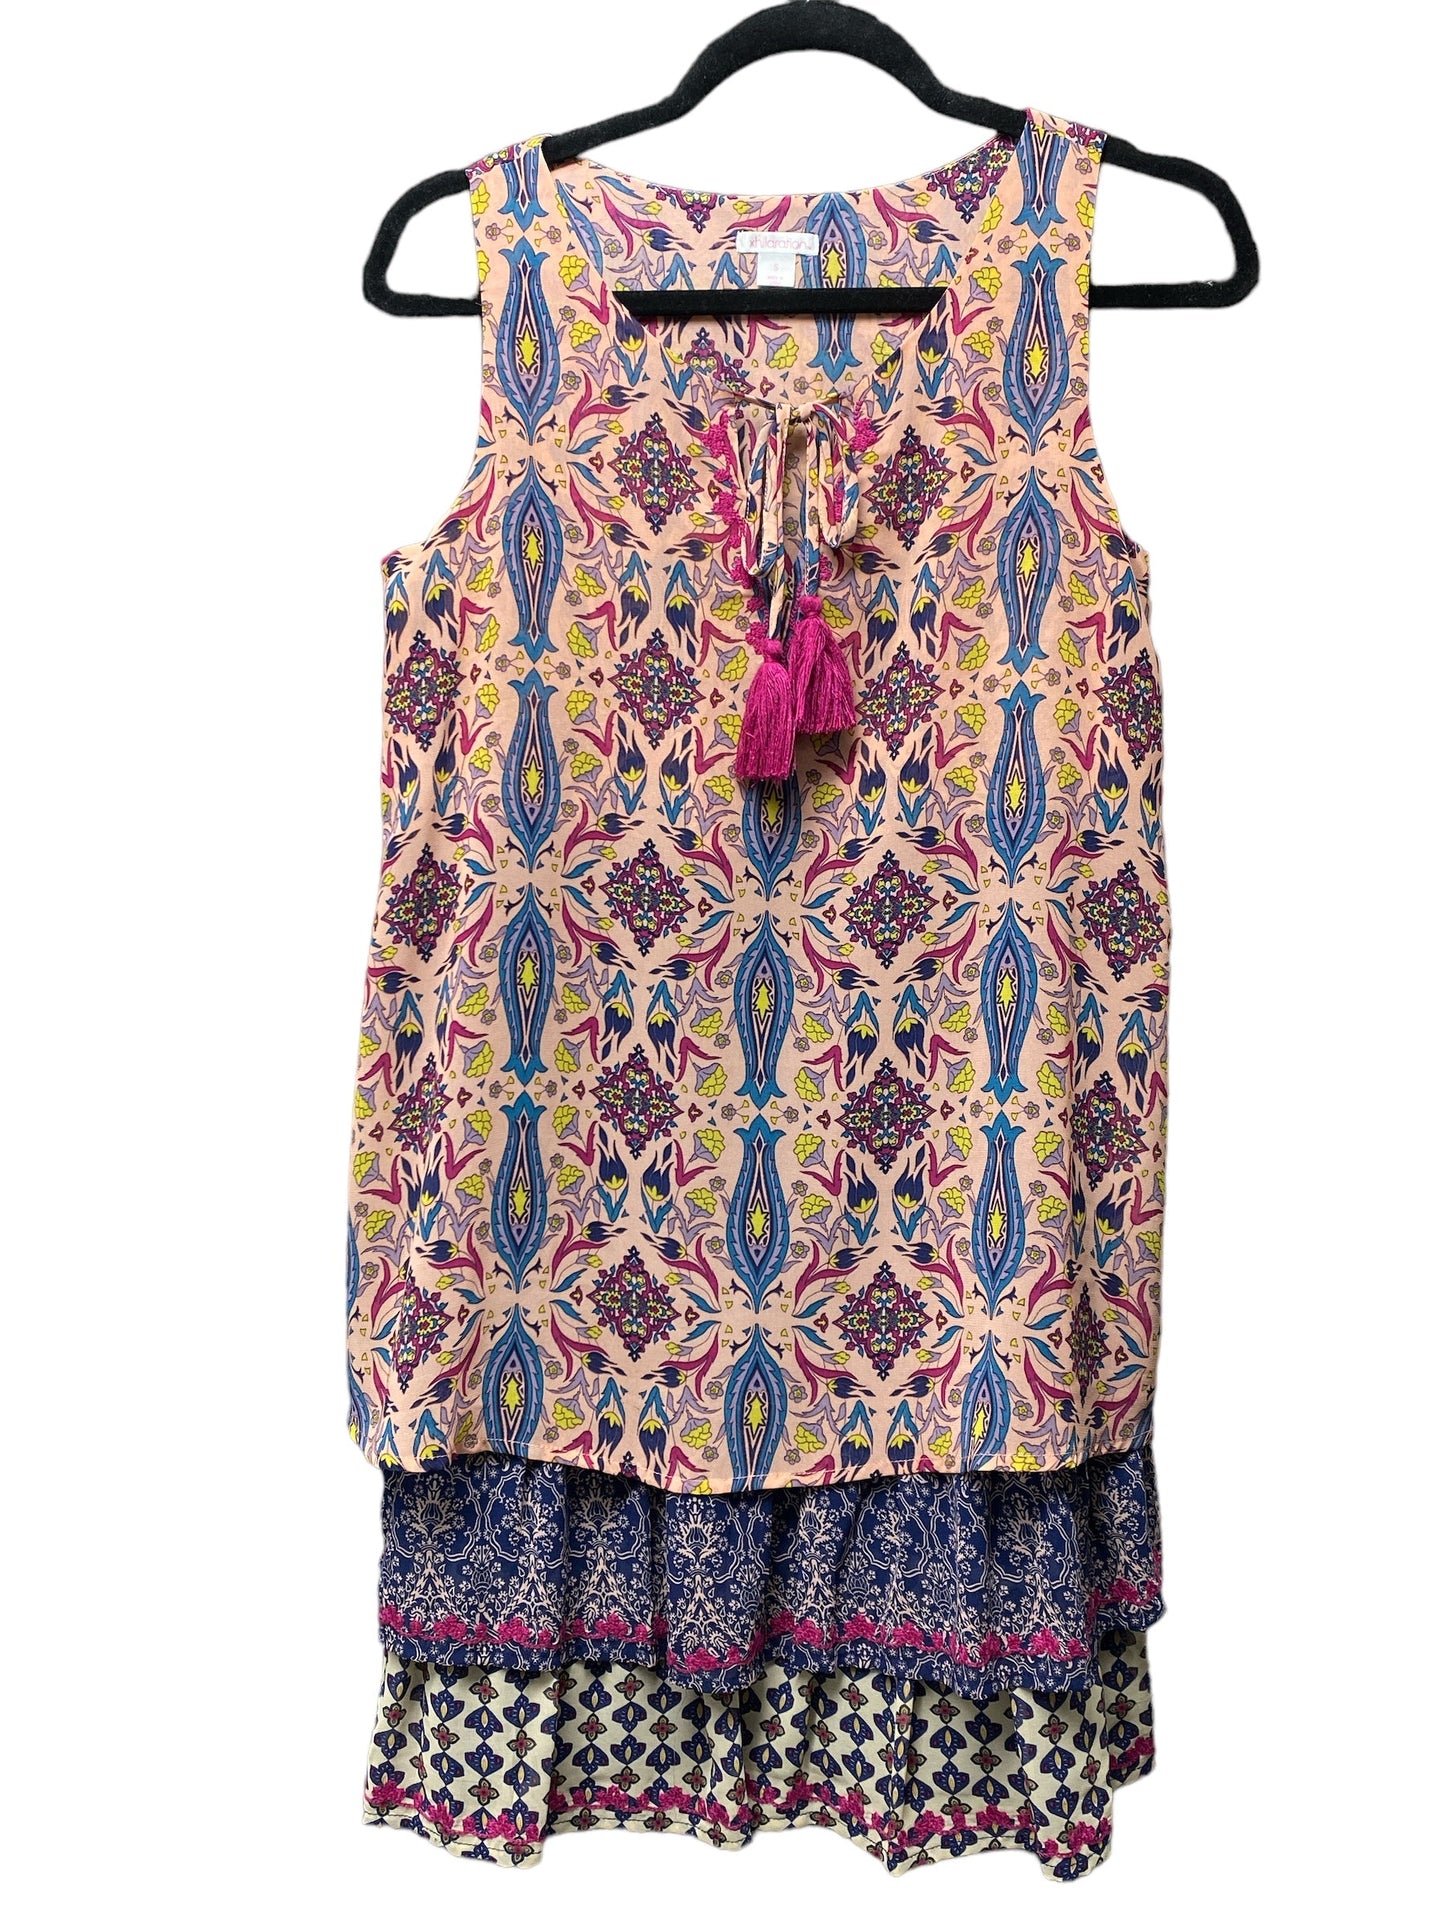 Multi-colored Dress Casual Short Xhilaration, Size S